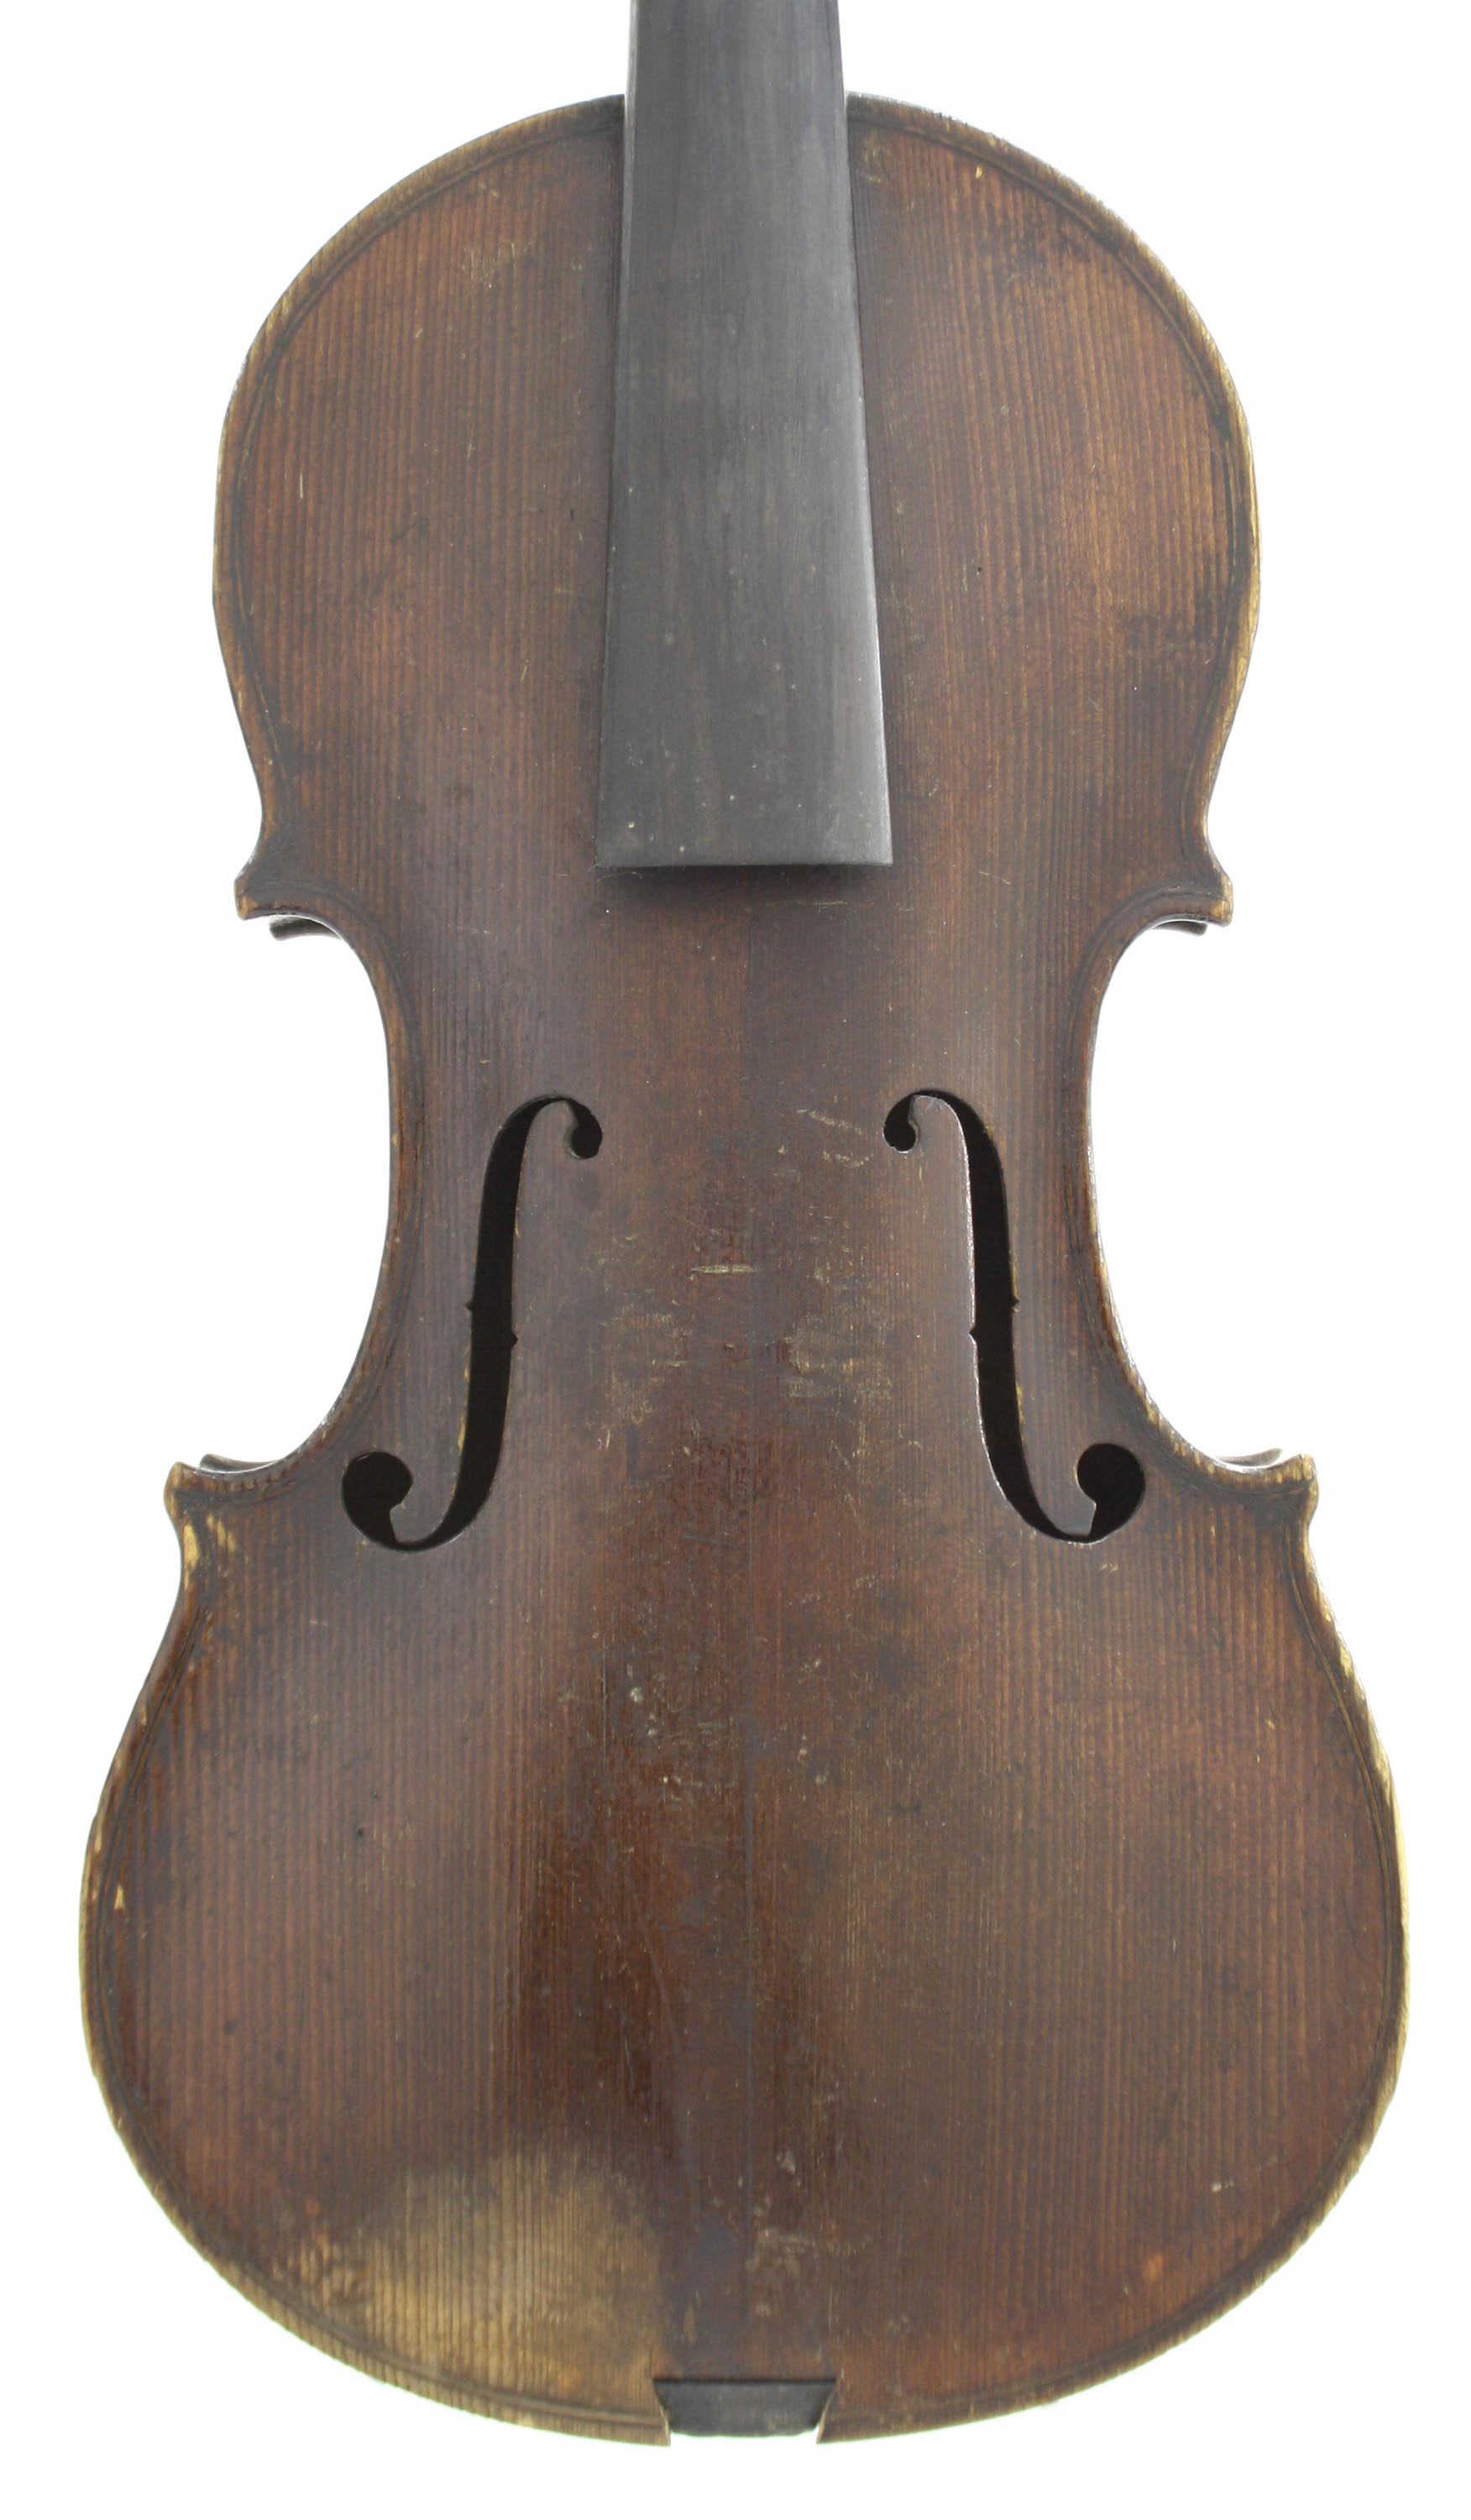 Scottish violin by and labelled James McIntosh, Violin & Violoncello Maker, Blairgowrie, no. 174